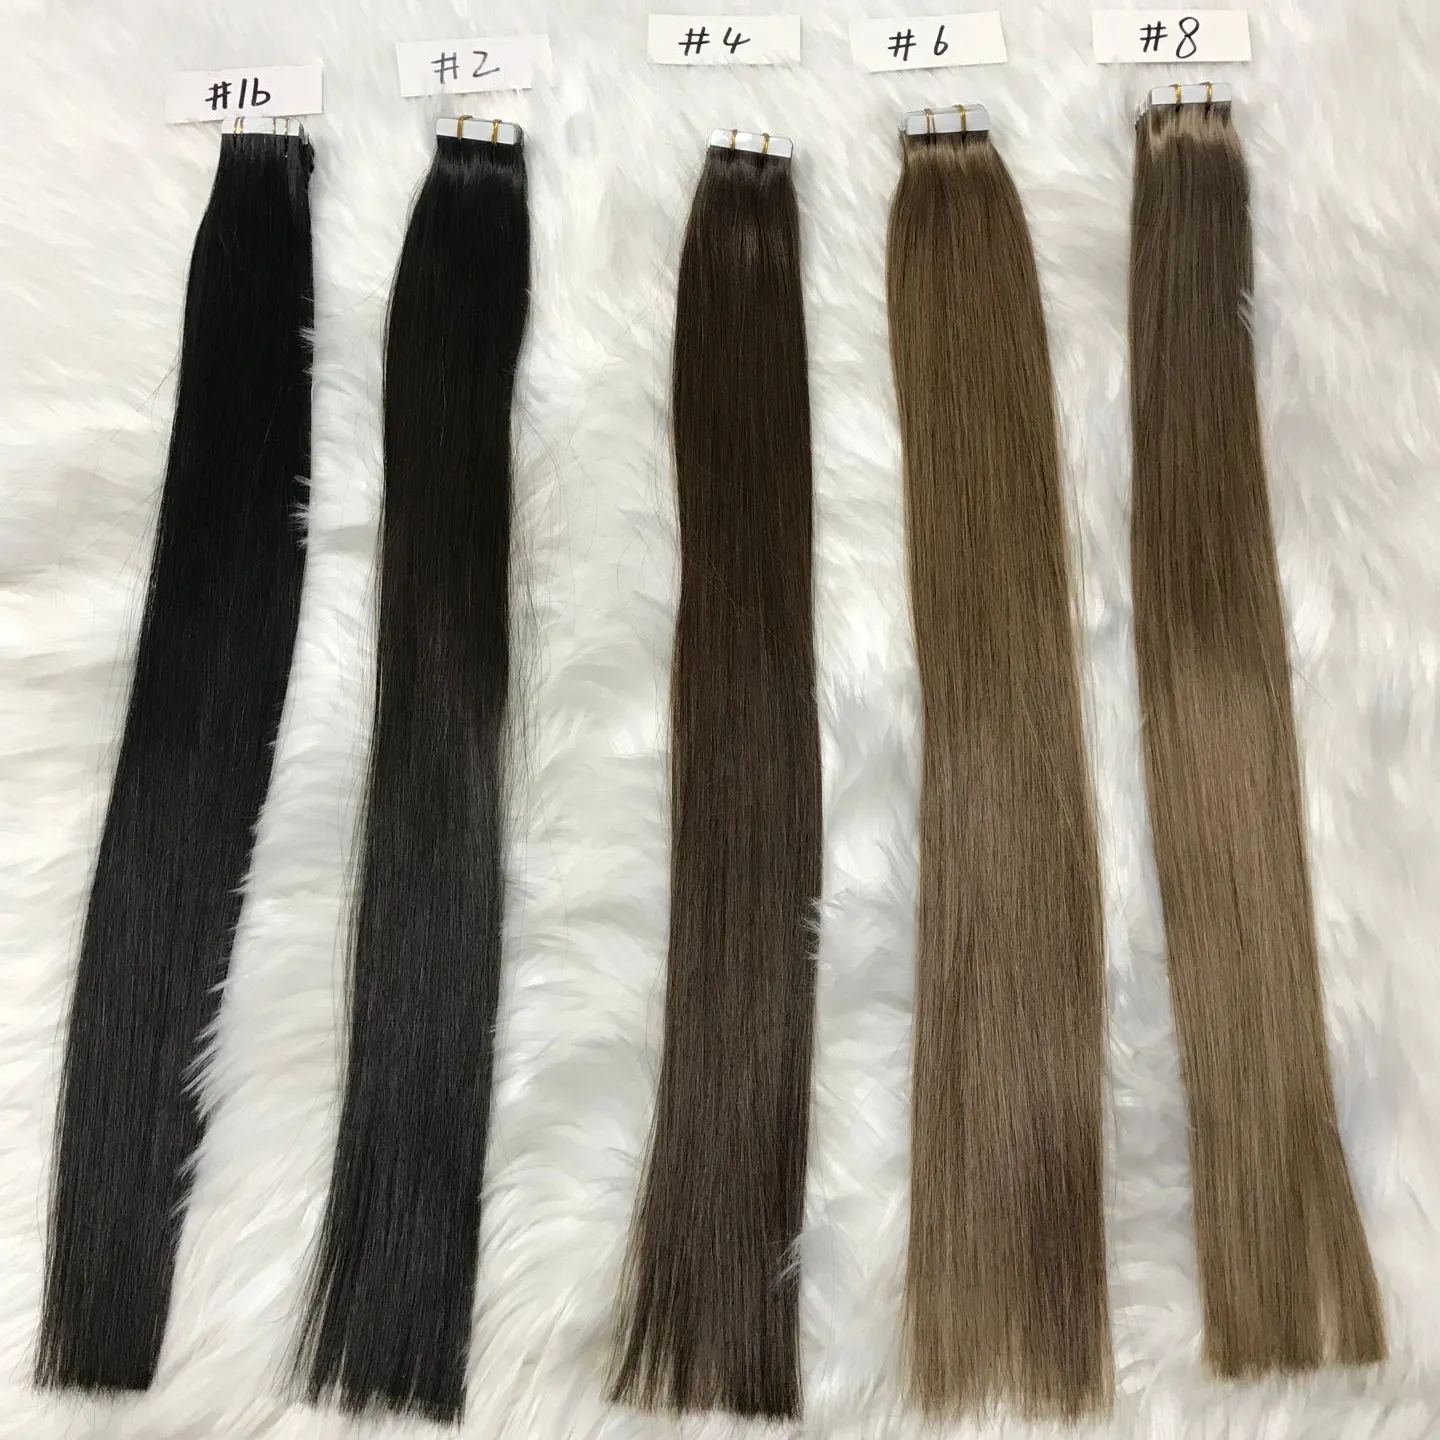 Extensiones de cabello humano 100 Remy con doble cinta, cabello virgen de alta calidad, gran Stock, listo para enviar